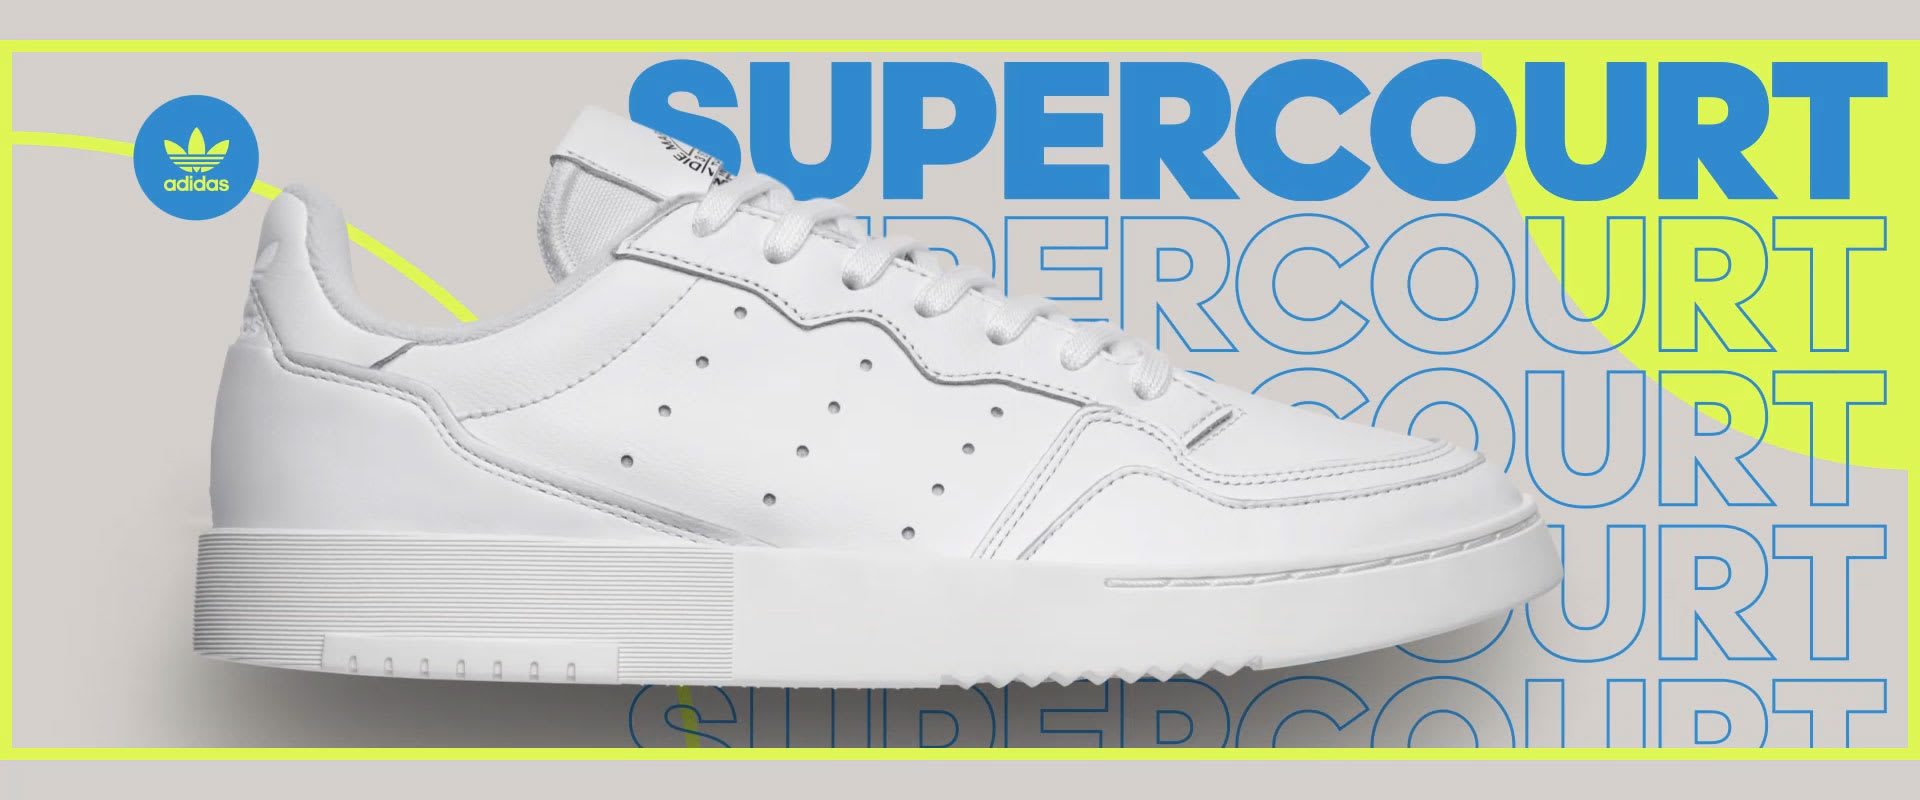 Supercourt | adidas Originals